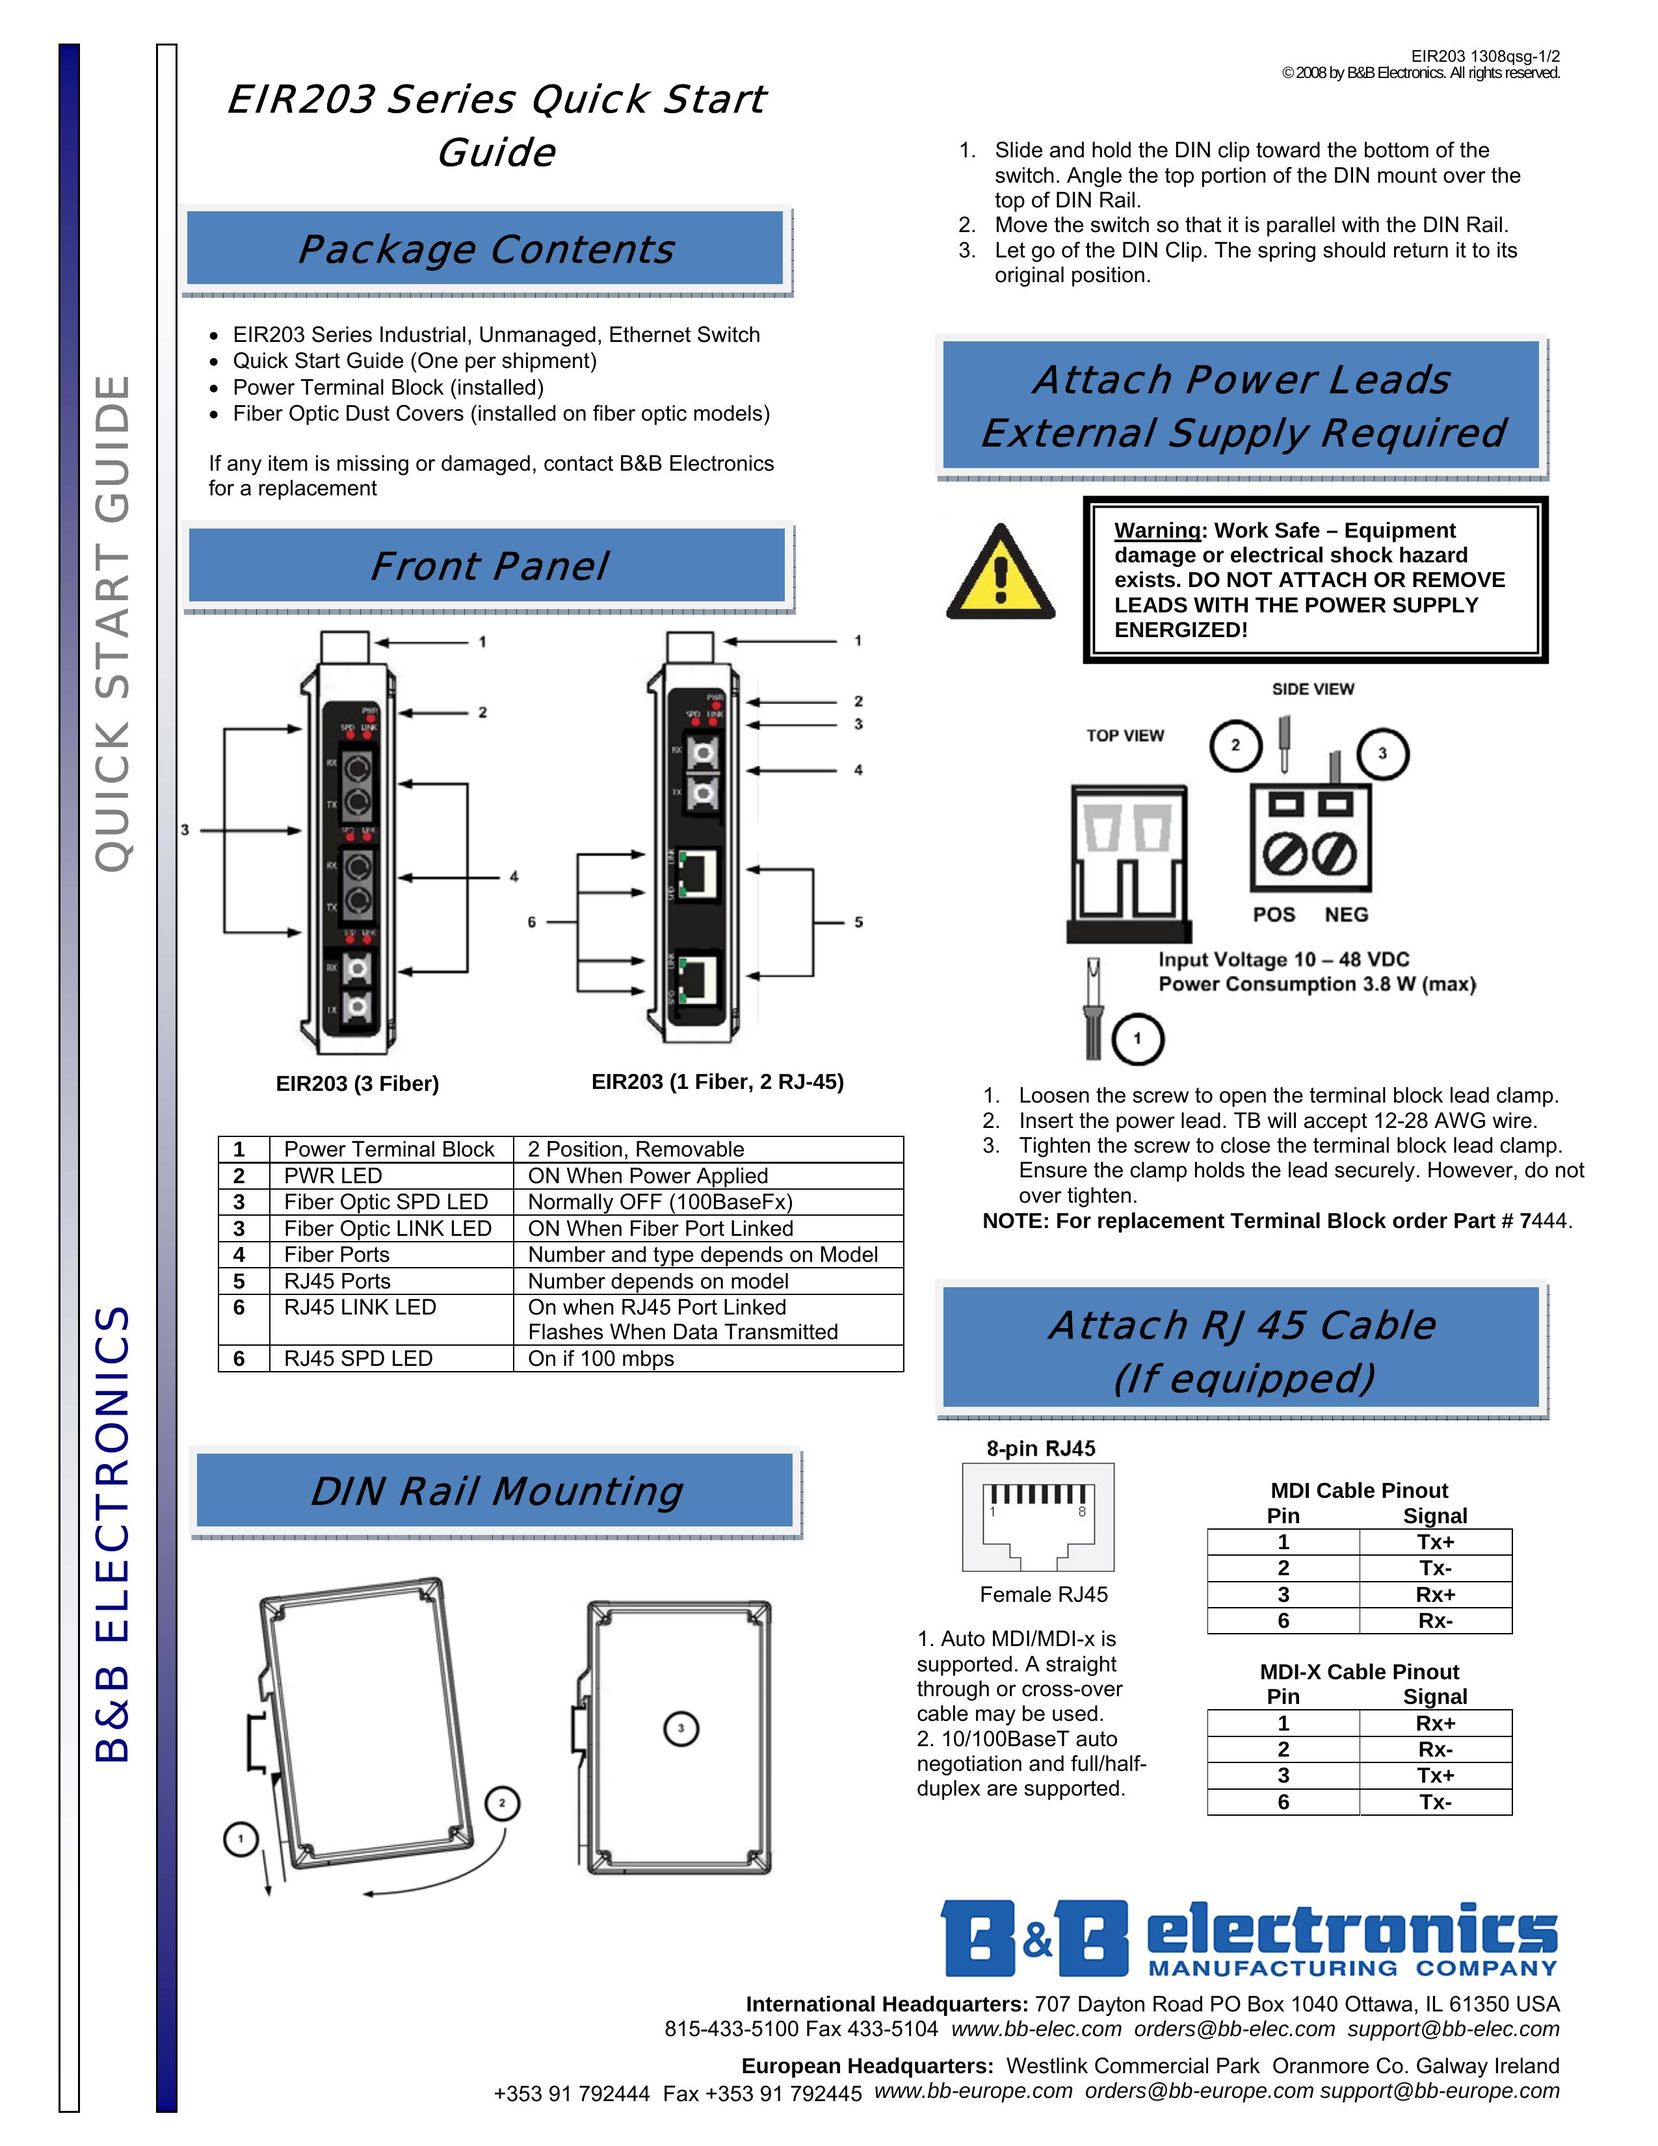 B&B Electronics EIR203-ST Network Card User Manual